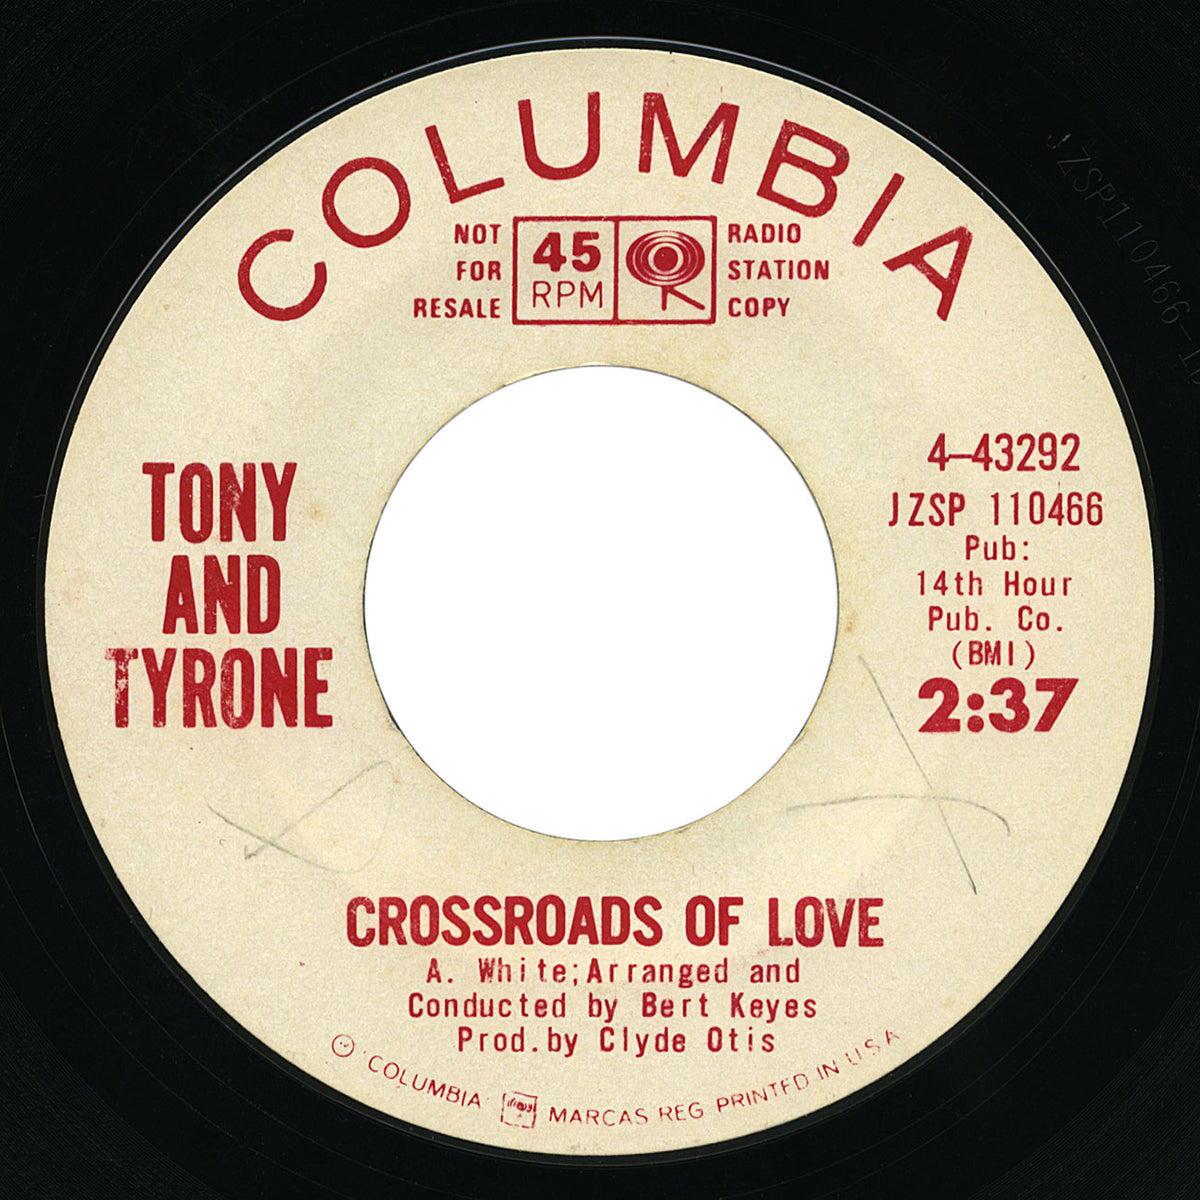 Tony And Tyrone – Crossroads Of Love – Columbia